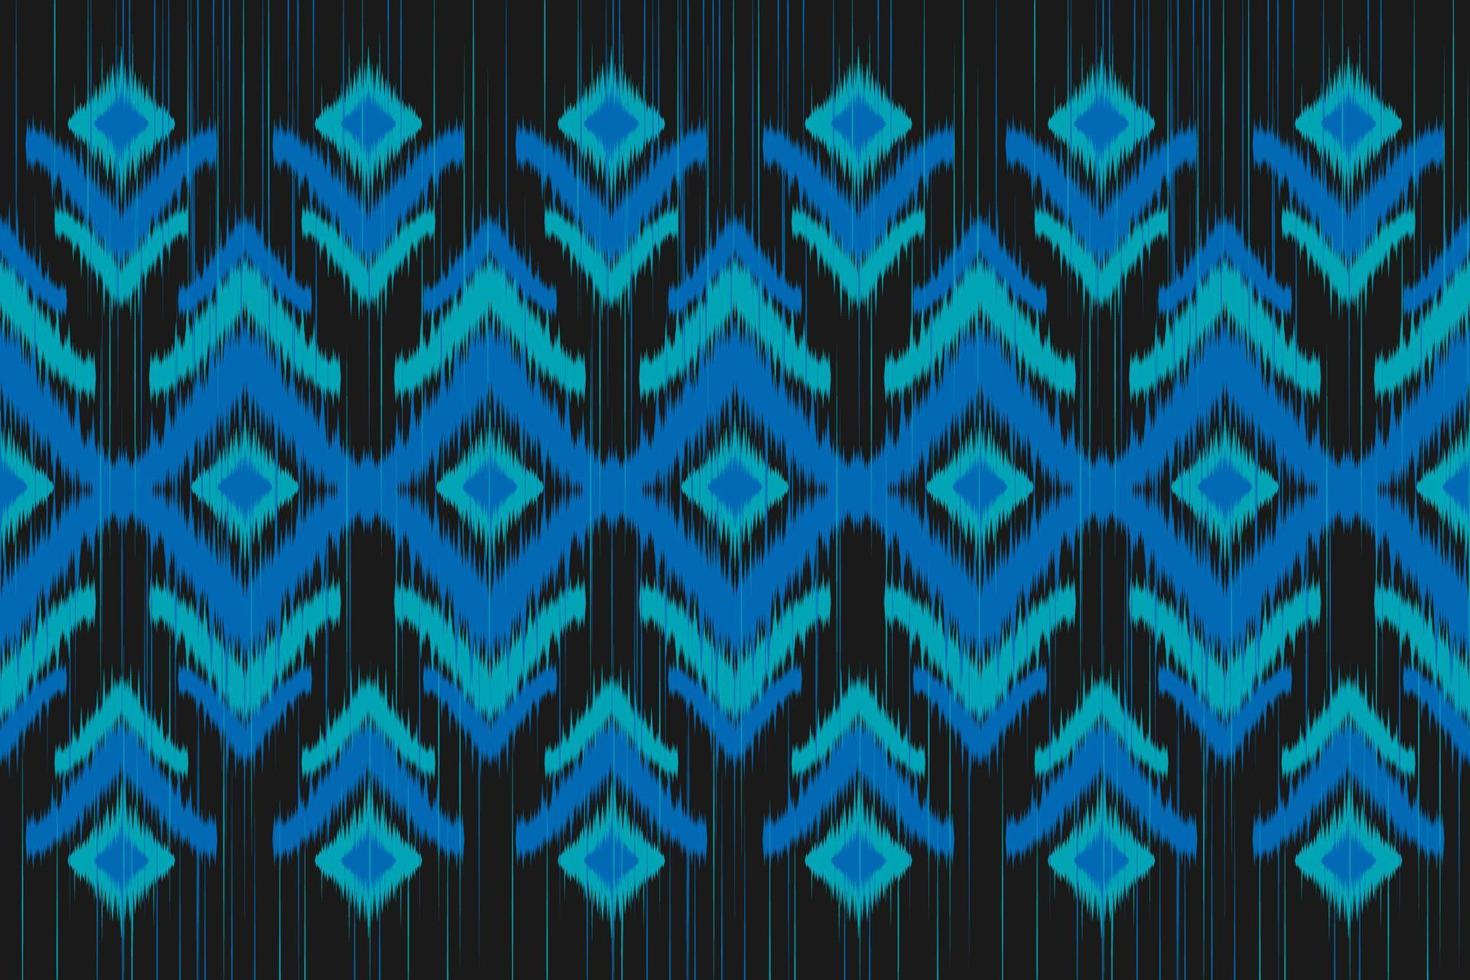 Carpet ethnic ikat art. Seamless pattern in tribal. Aztec geometric ornament print. vector